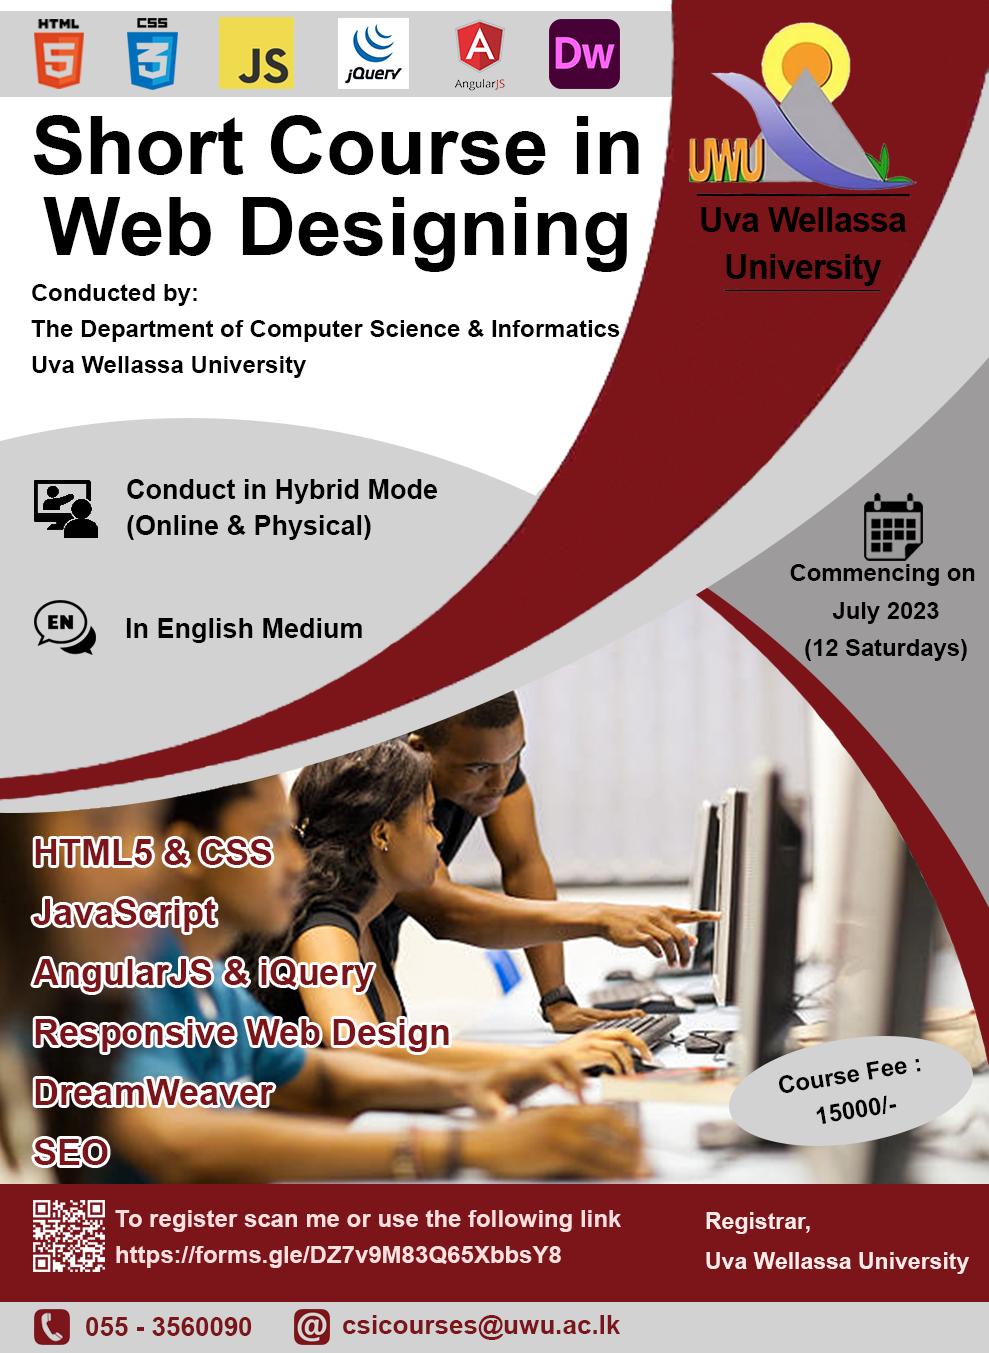 Short Course in Web Designing